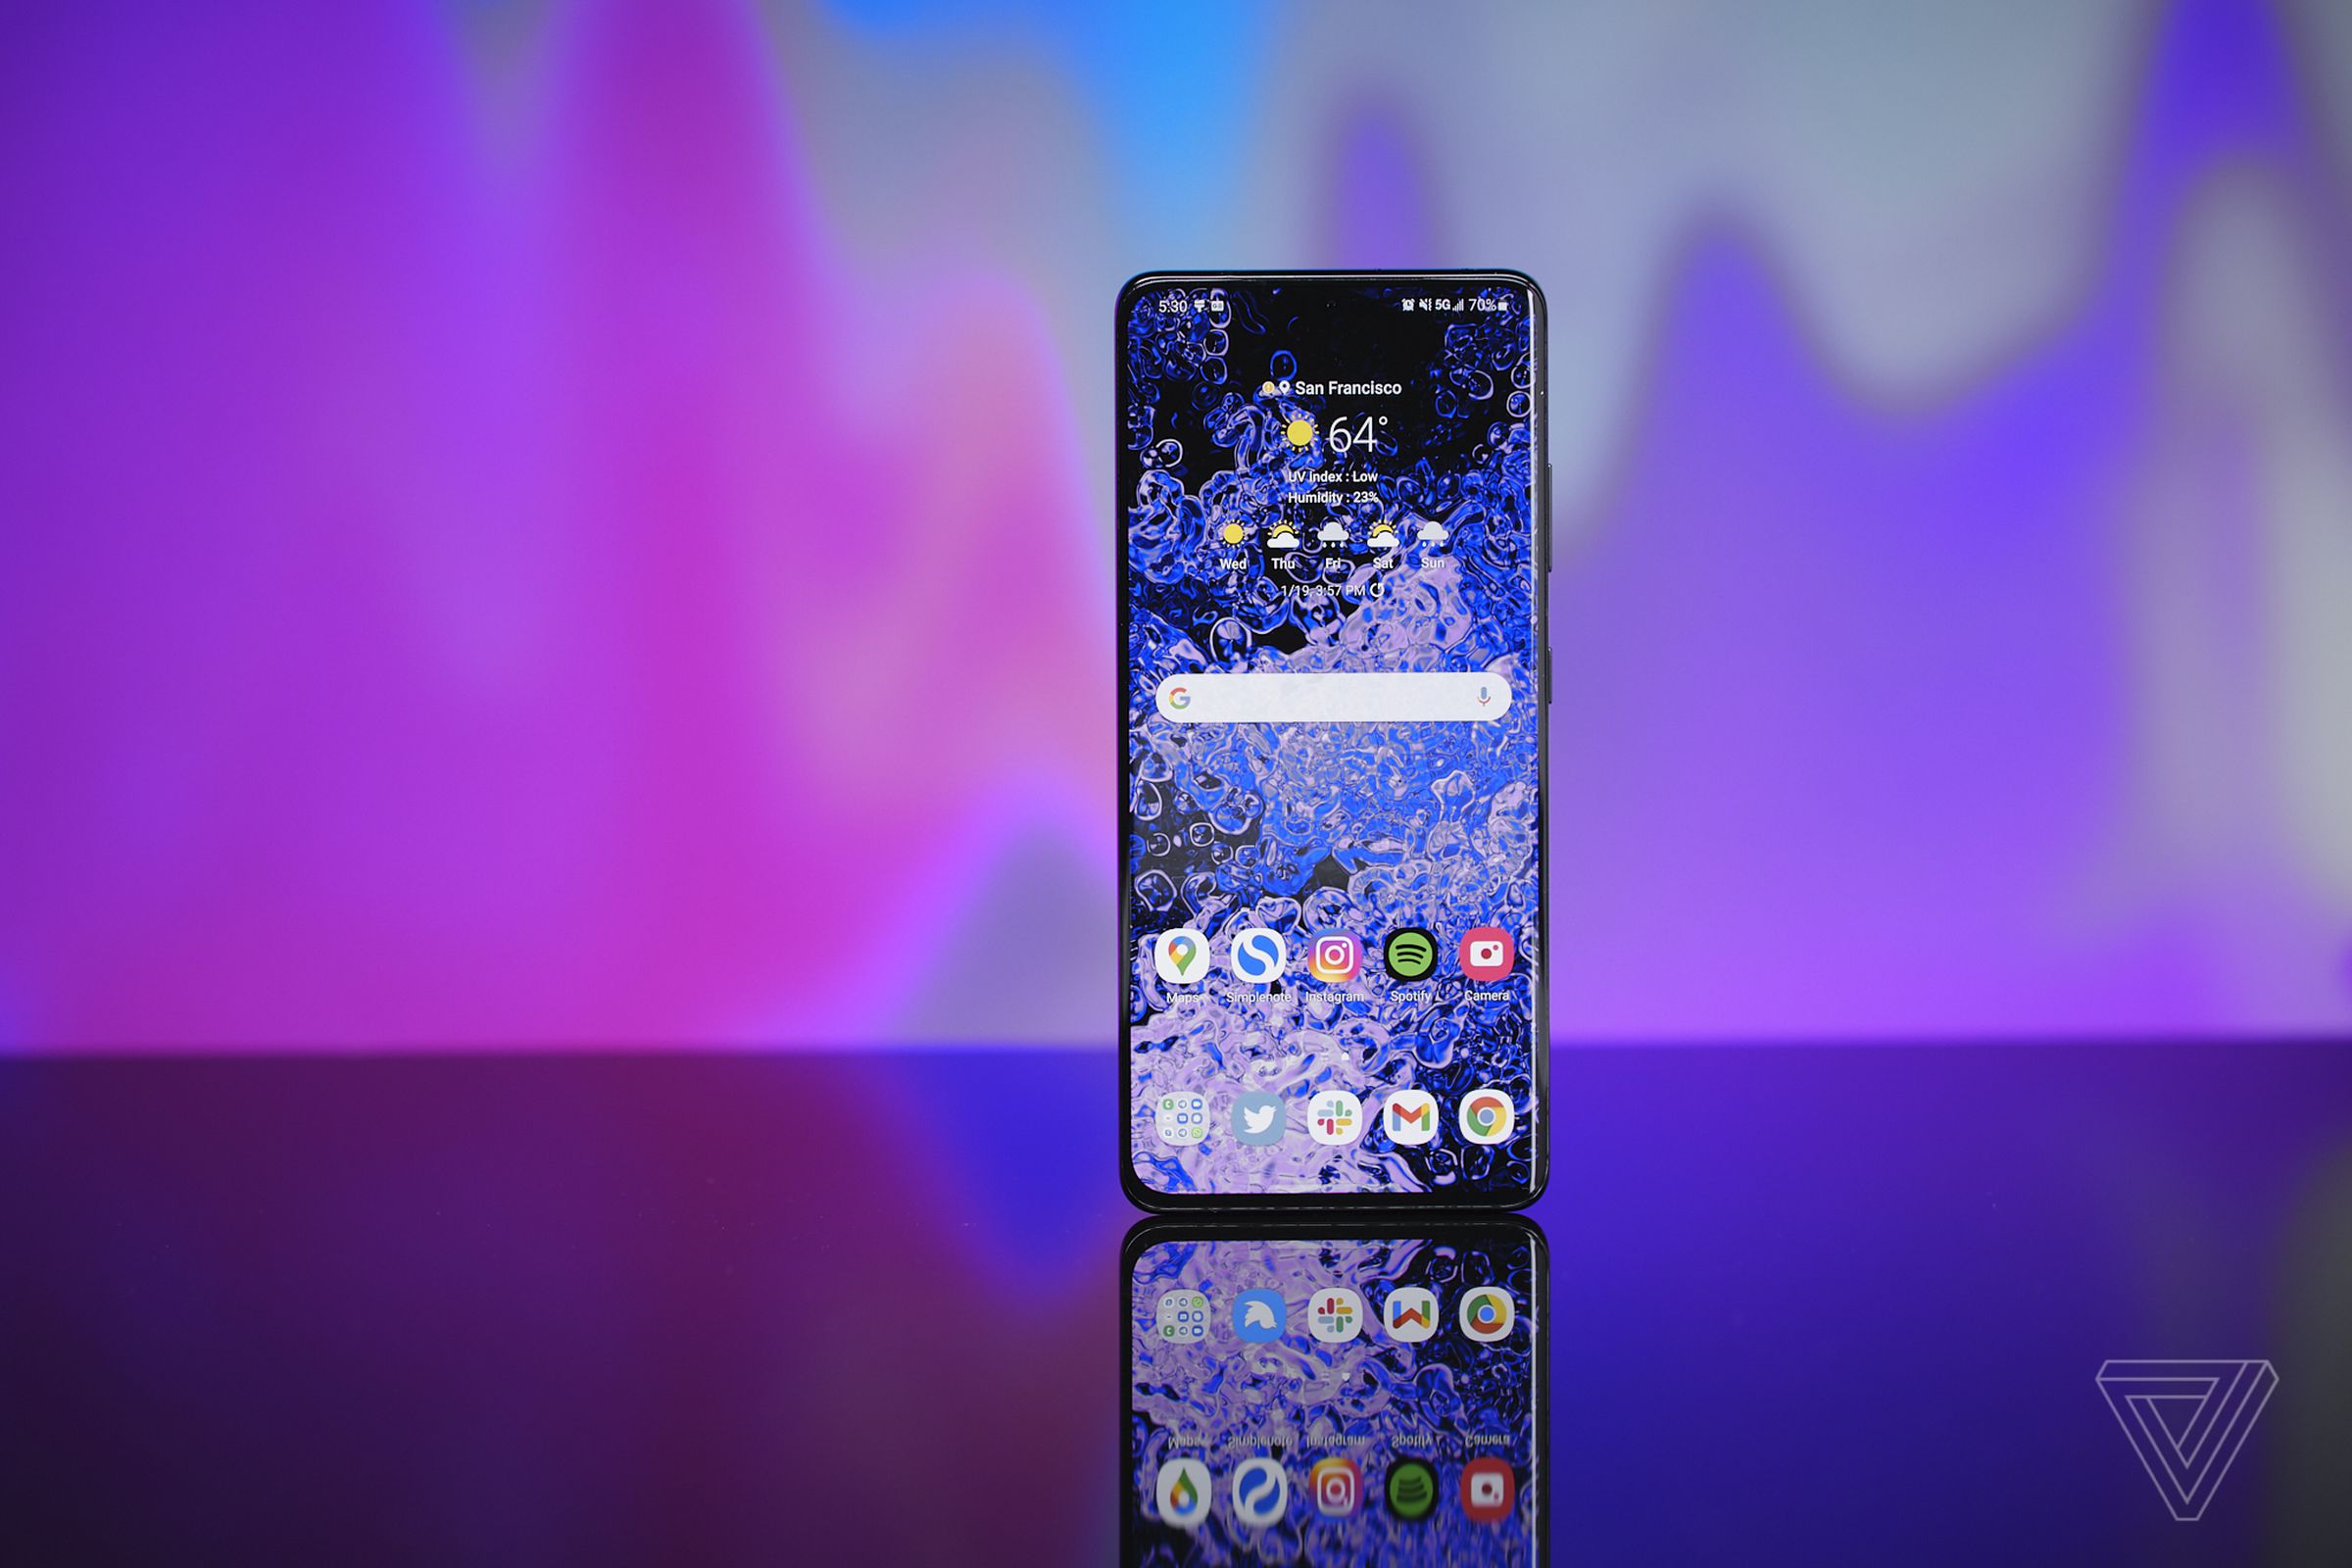 Samsung’s One UI on the Galaxy S21 Ultra